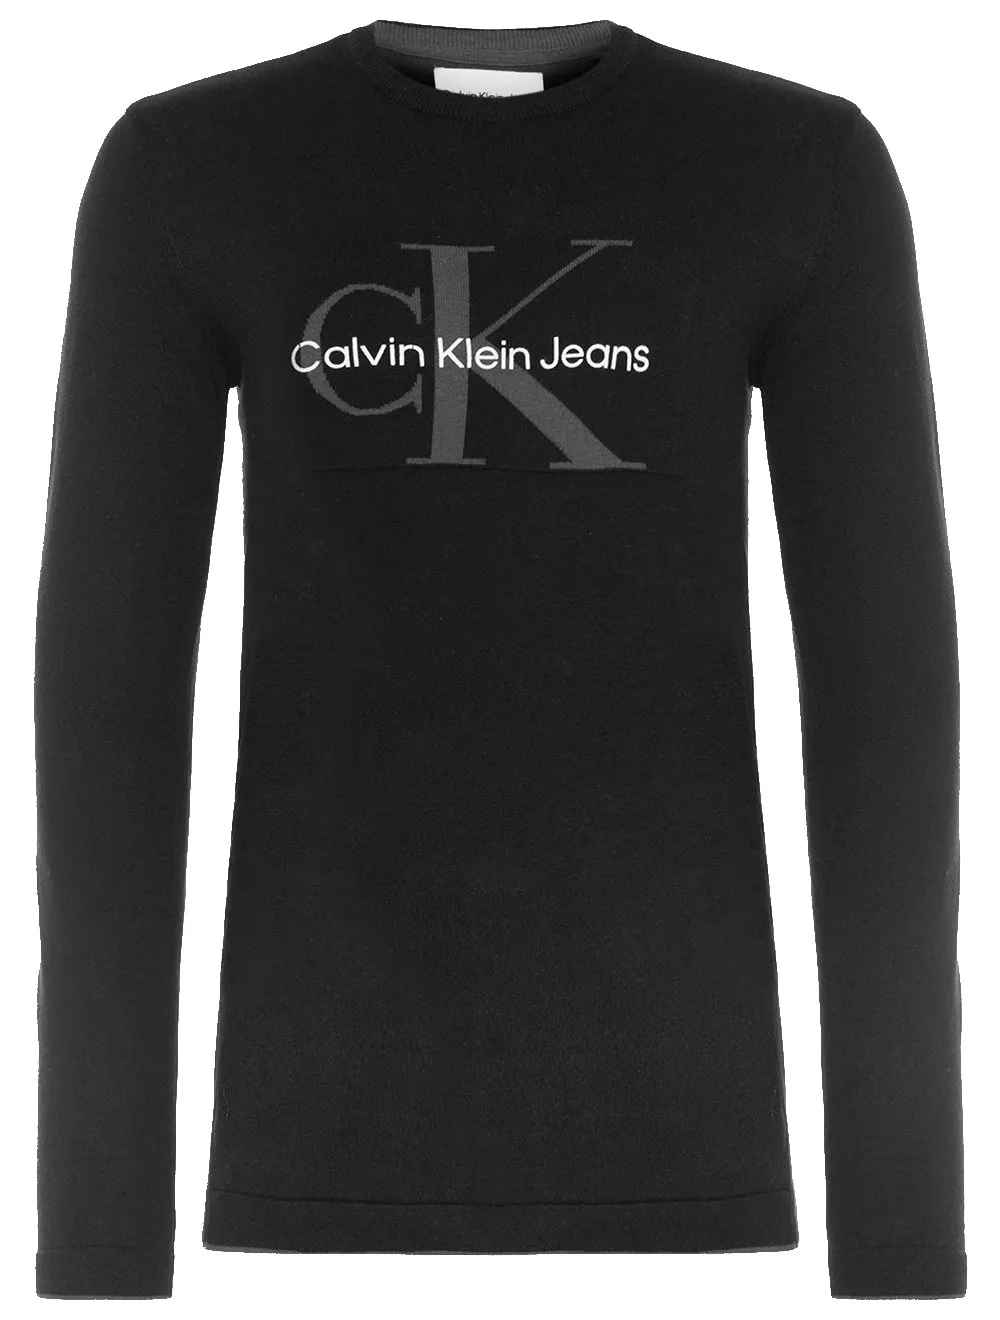 Suéter Calvin Klein Jeans Masculino Tricot Reissue Preto